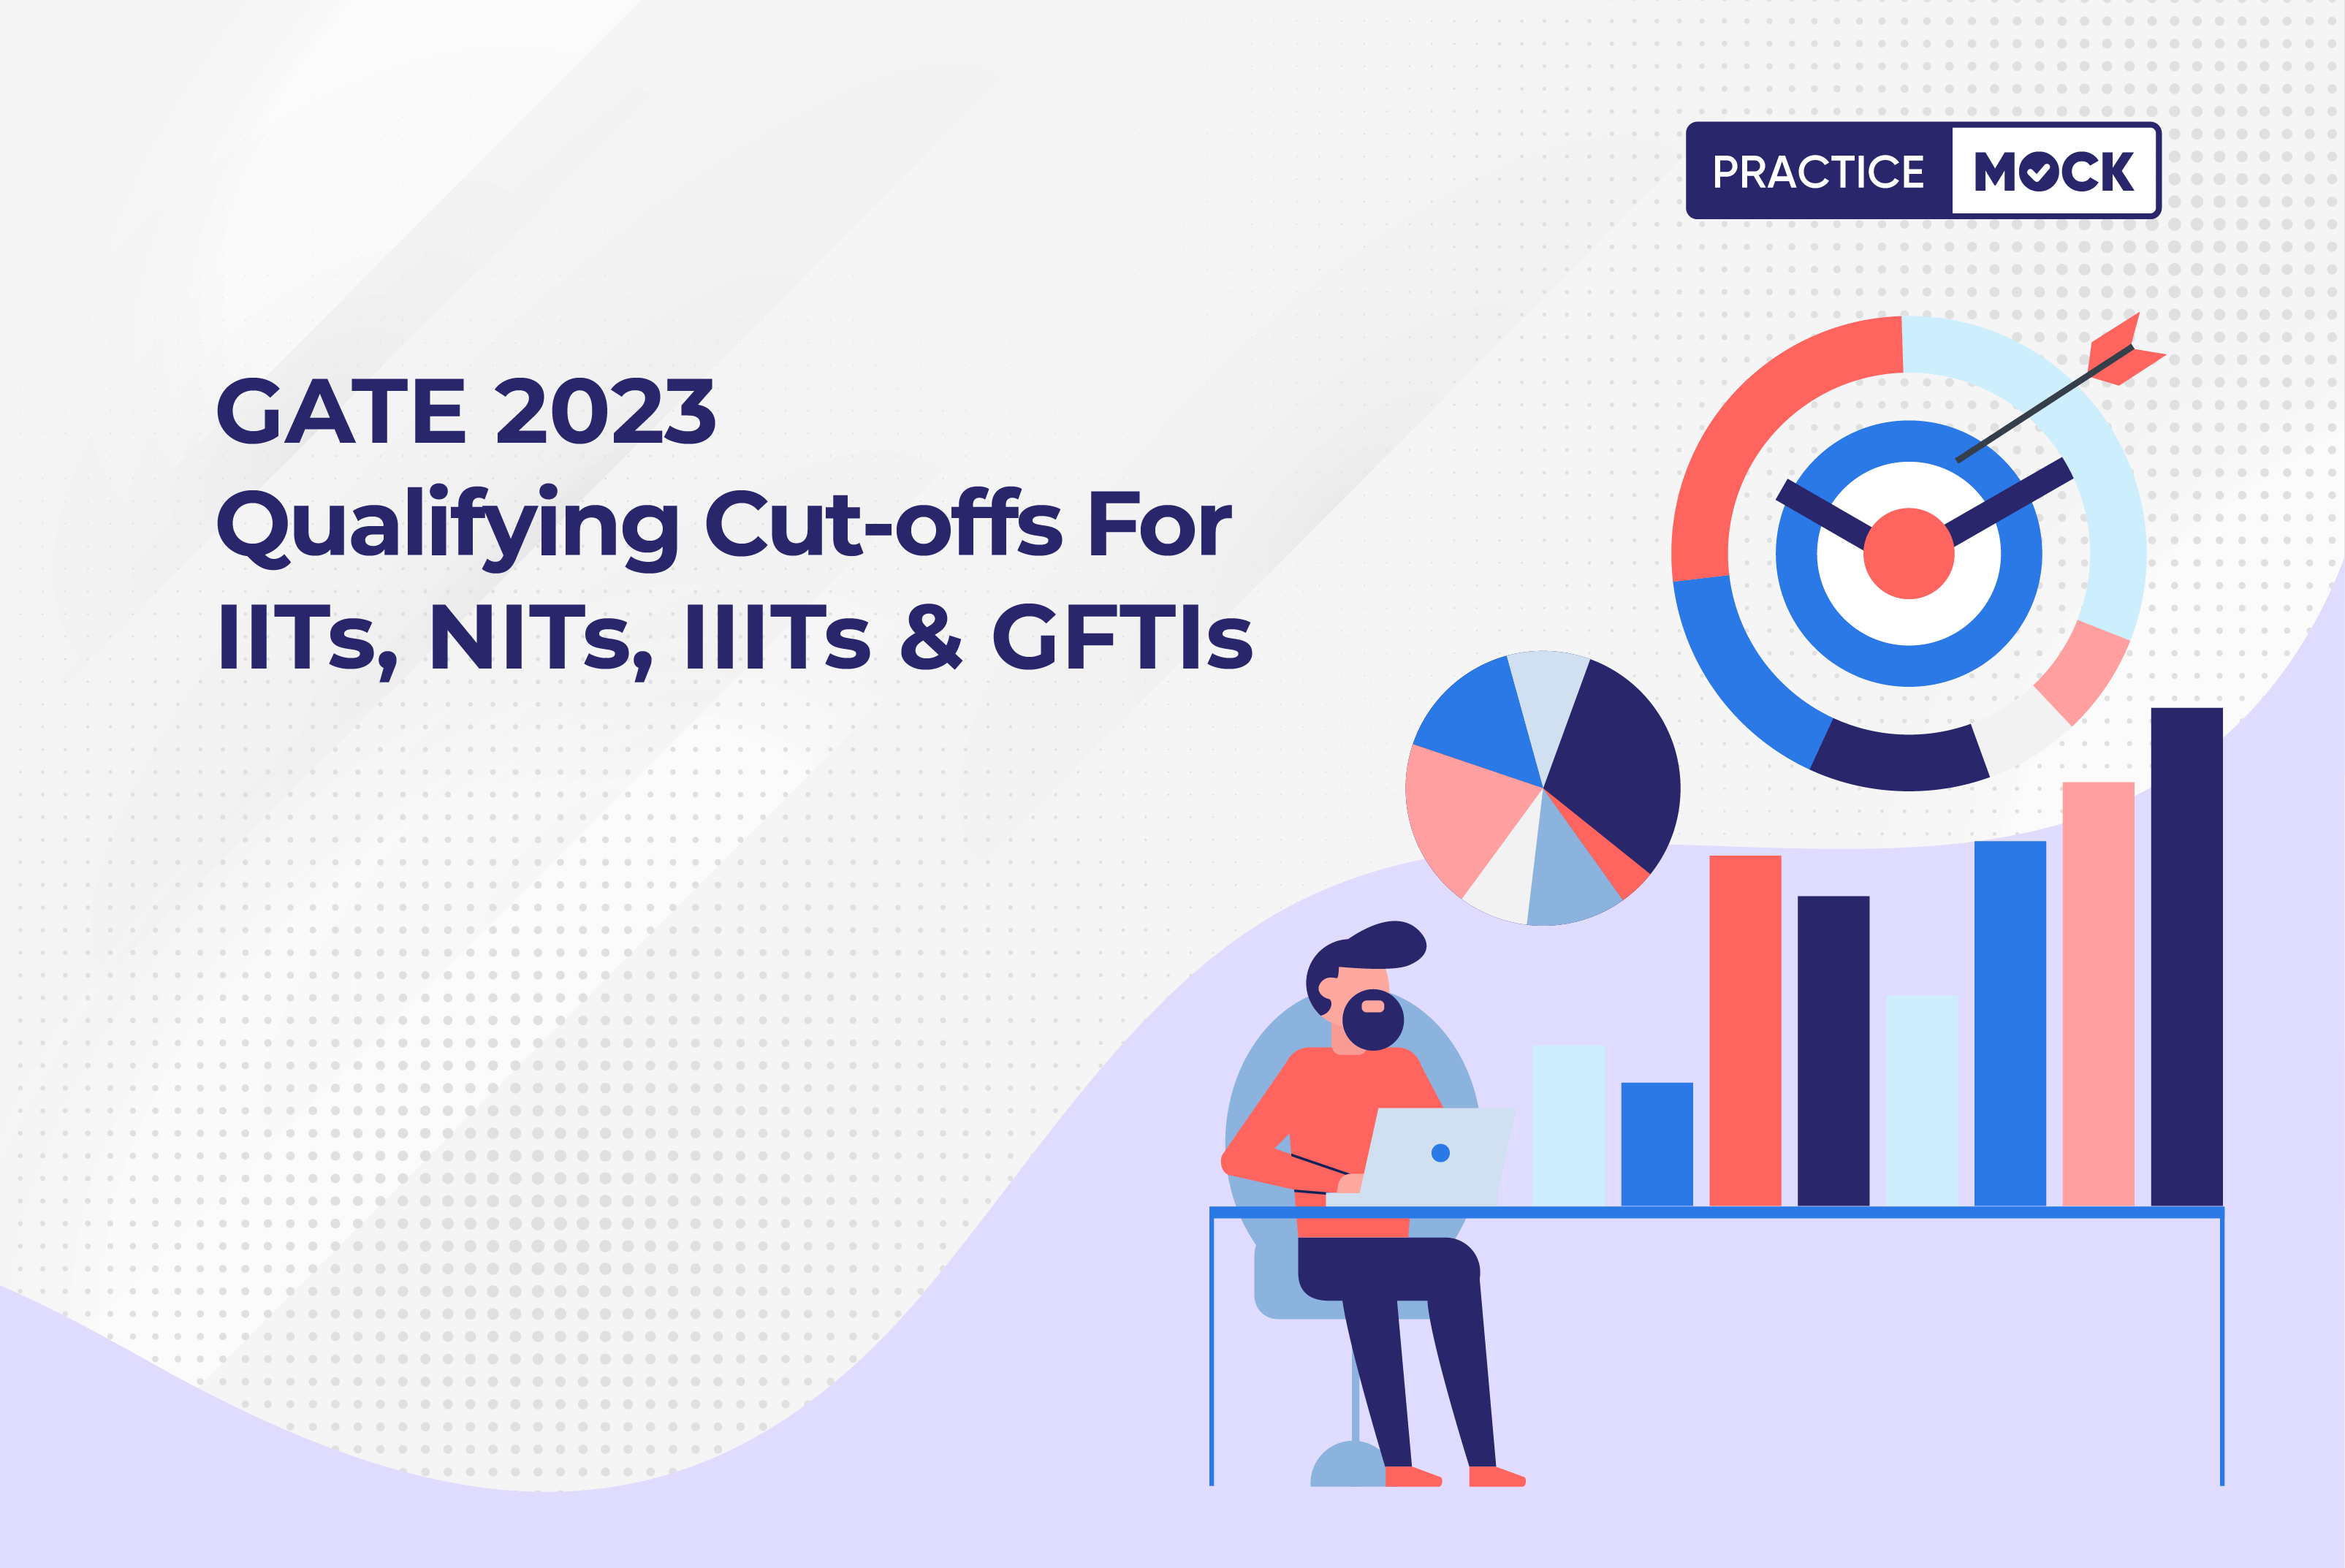 GATE 2023 Qualifying Cut-offs for IITs, NITs, IIITs & GFTIs